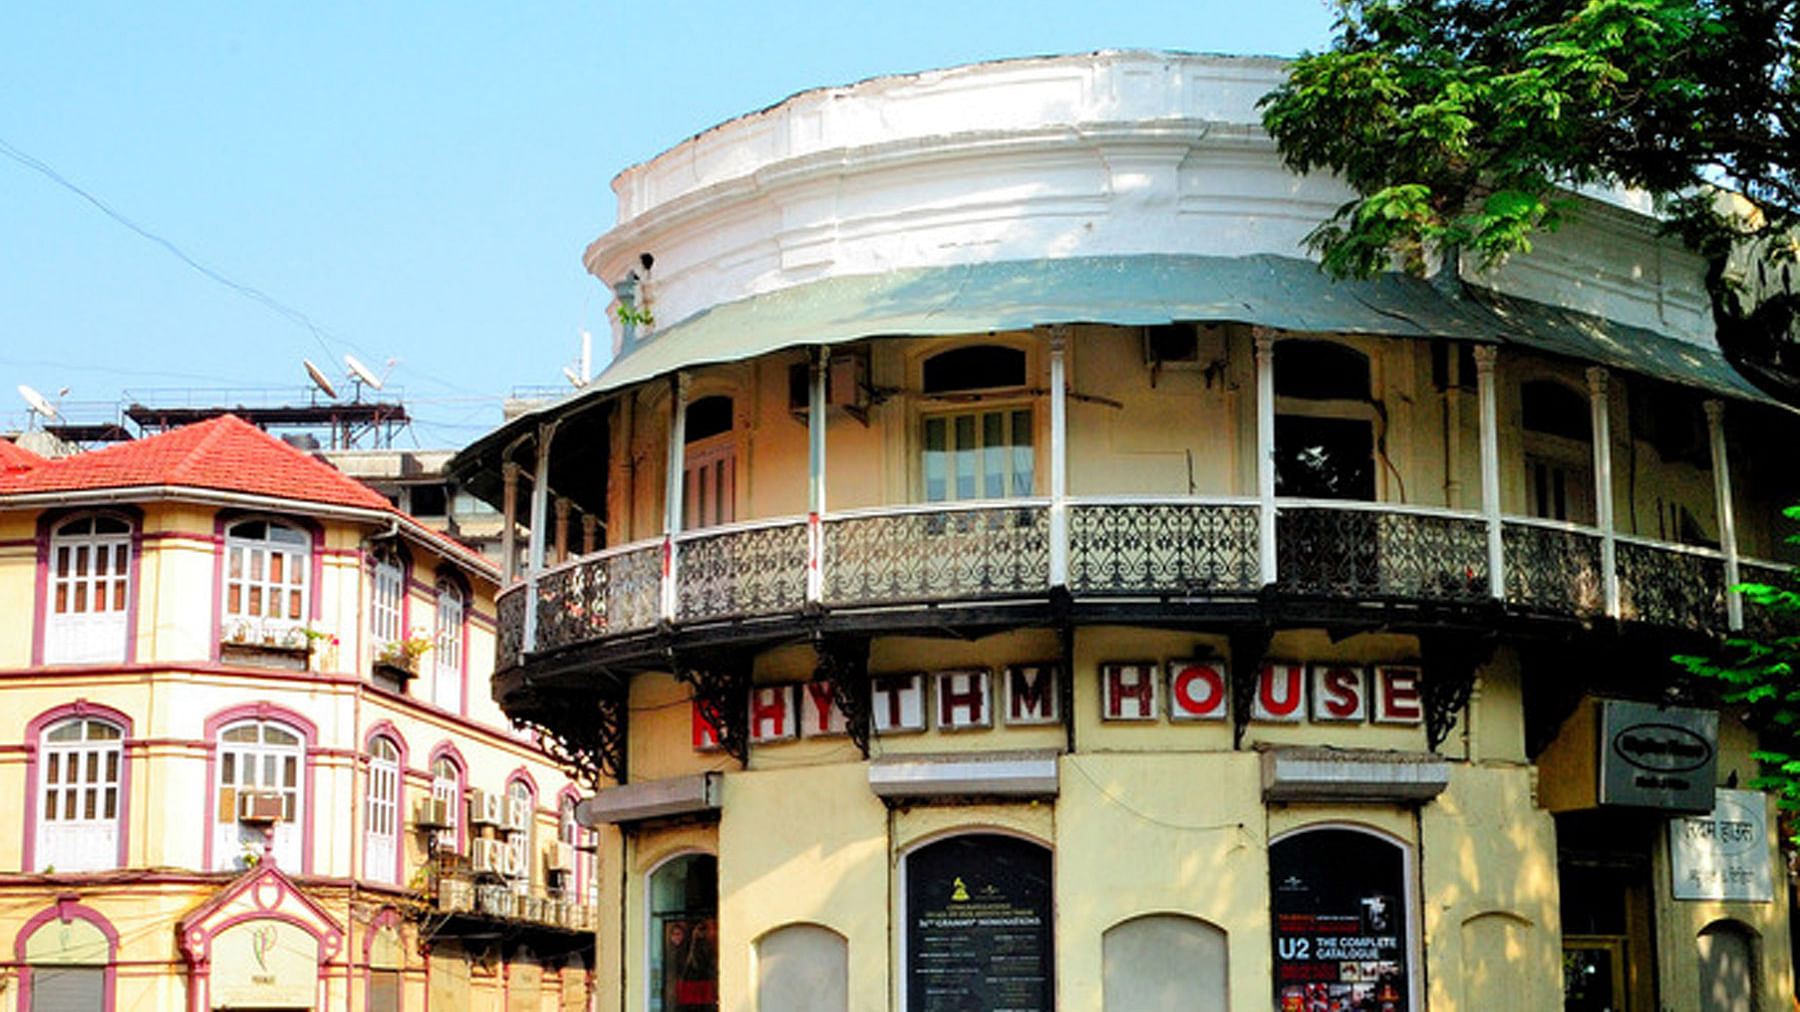 Rhythm House in Mumbai&nbsp;(Photo: <a href="http://www.tripoto.com/trip/my-perfect-day-in-bombay-2682">tripoto.com/Neehar Mishra</a>)